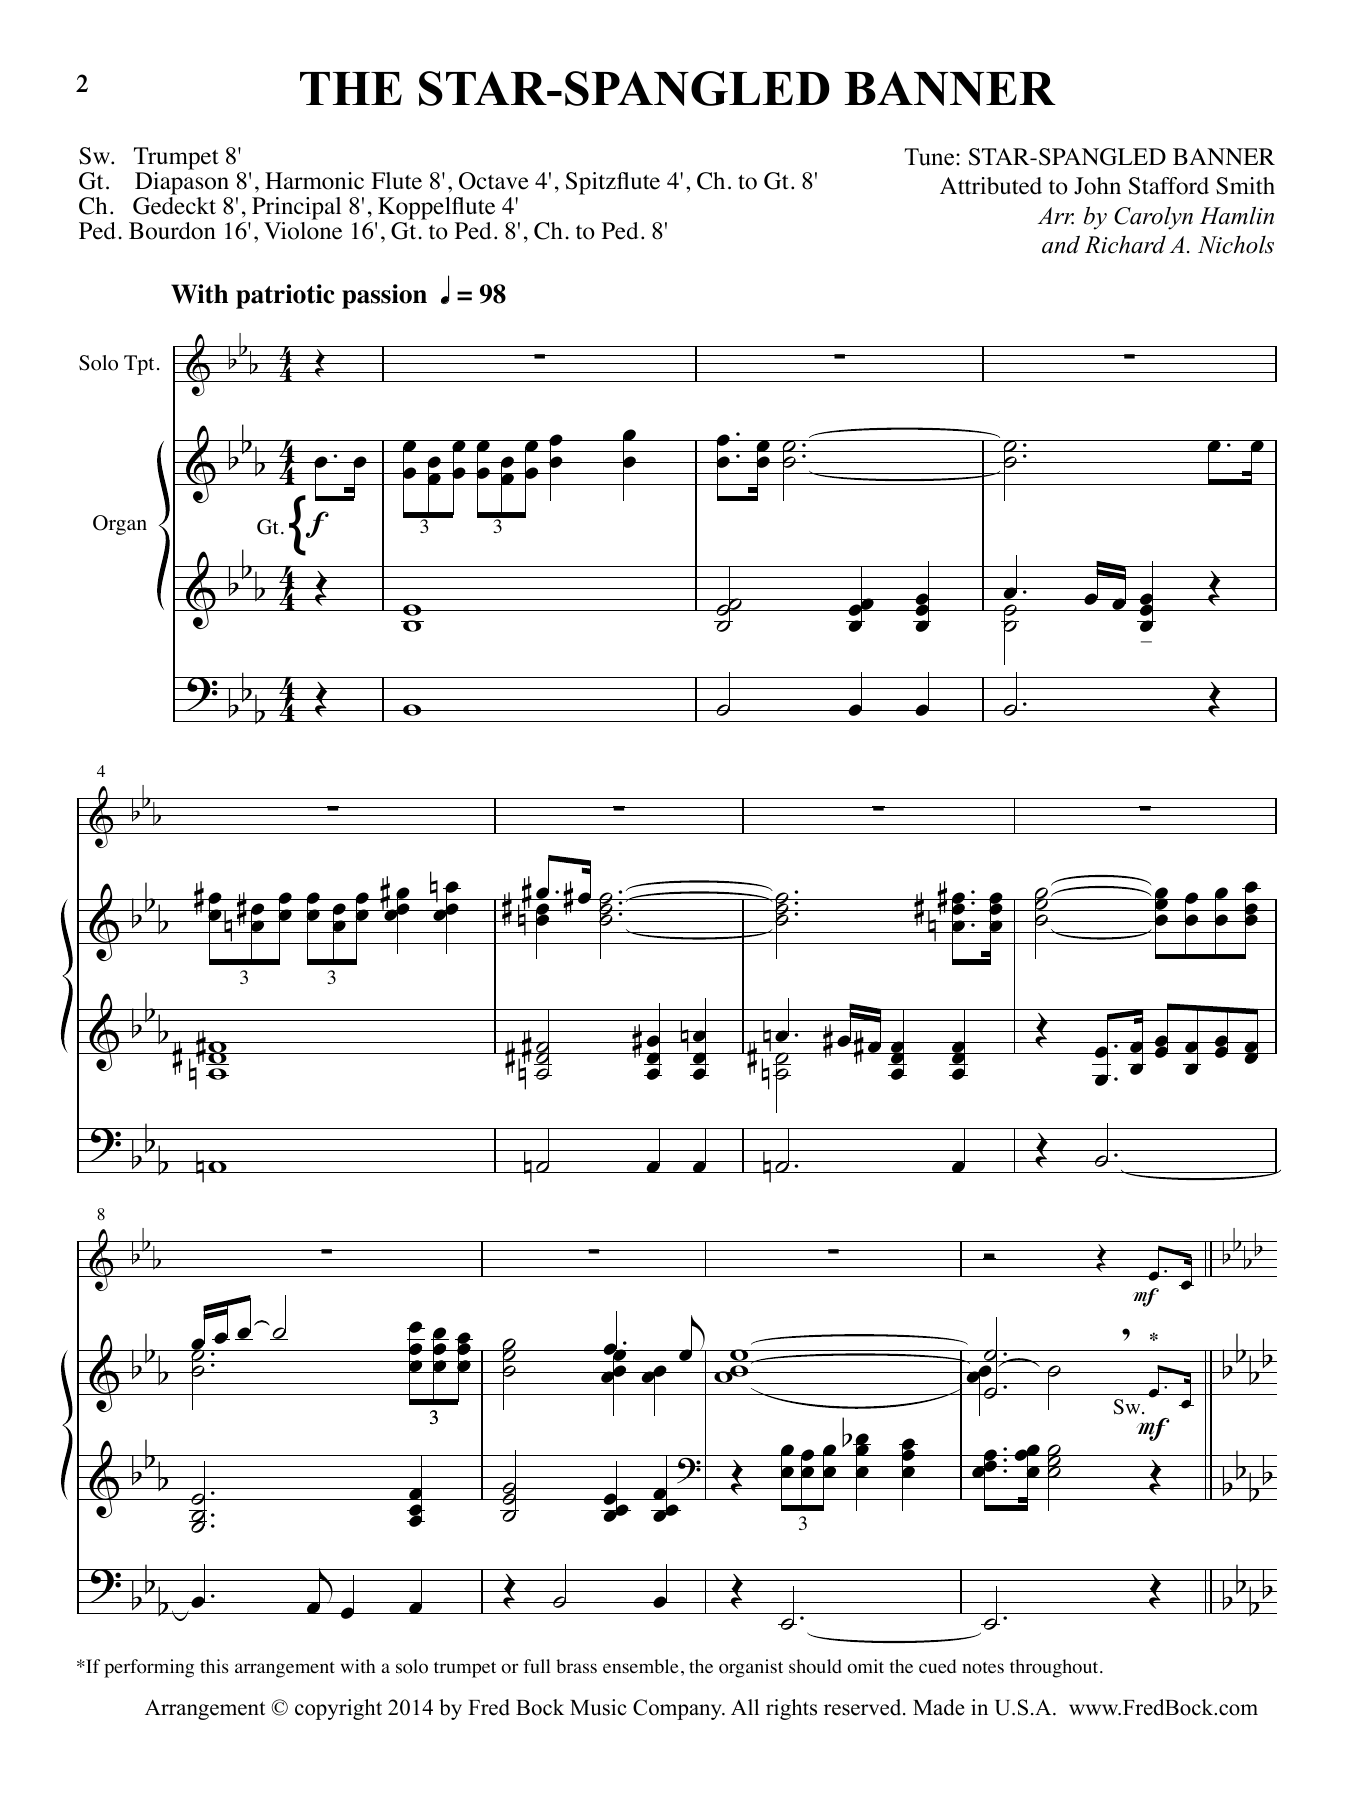 John Stafford Smith The Star-Spangled Banner (arr. Carolyn Hamlin and Richard A. Nichols) Sheet Music Notes & Chords for Organ - Download or Print PDF